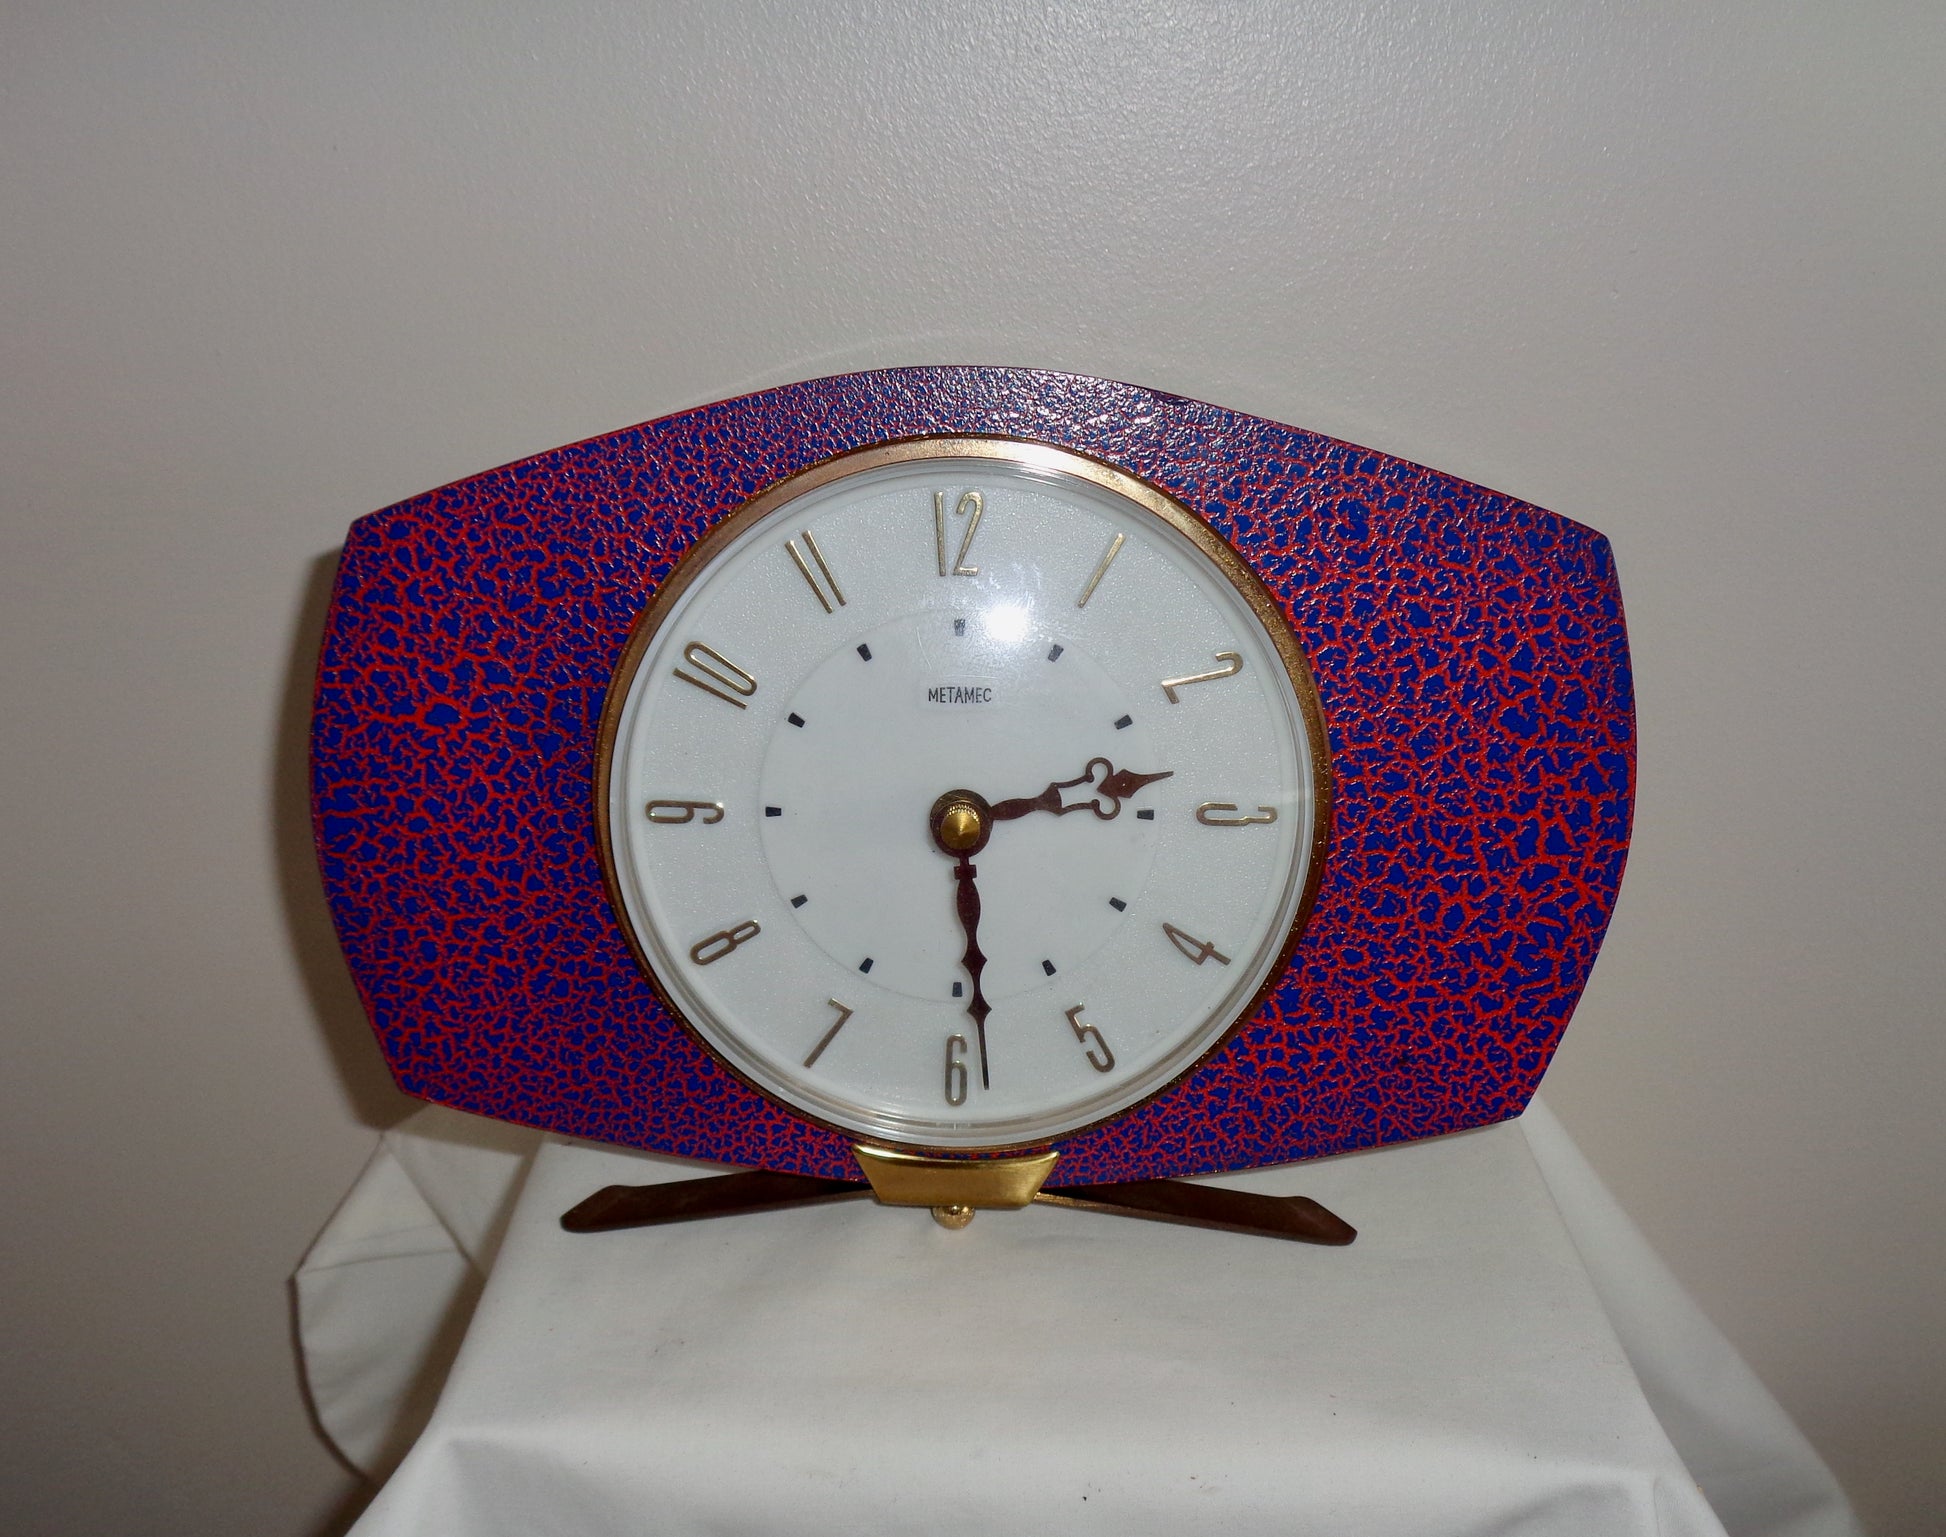 Vintage METAMEC Quartz Shelf/Mantle Clock With Blue/Red Crackle Glaze Finish